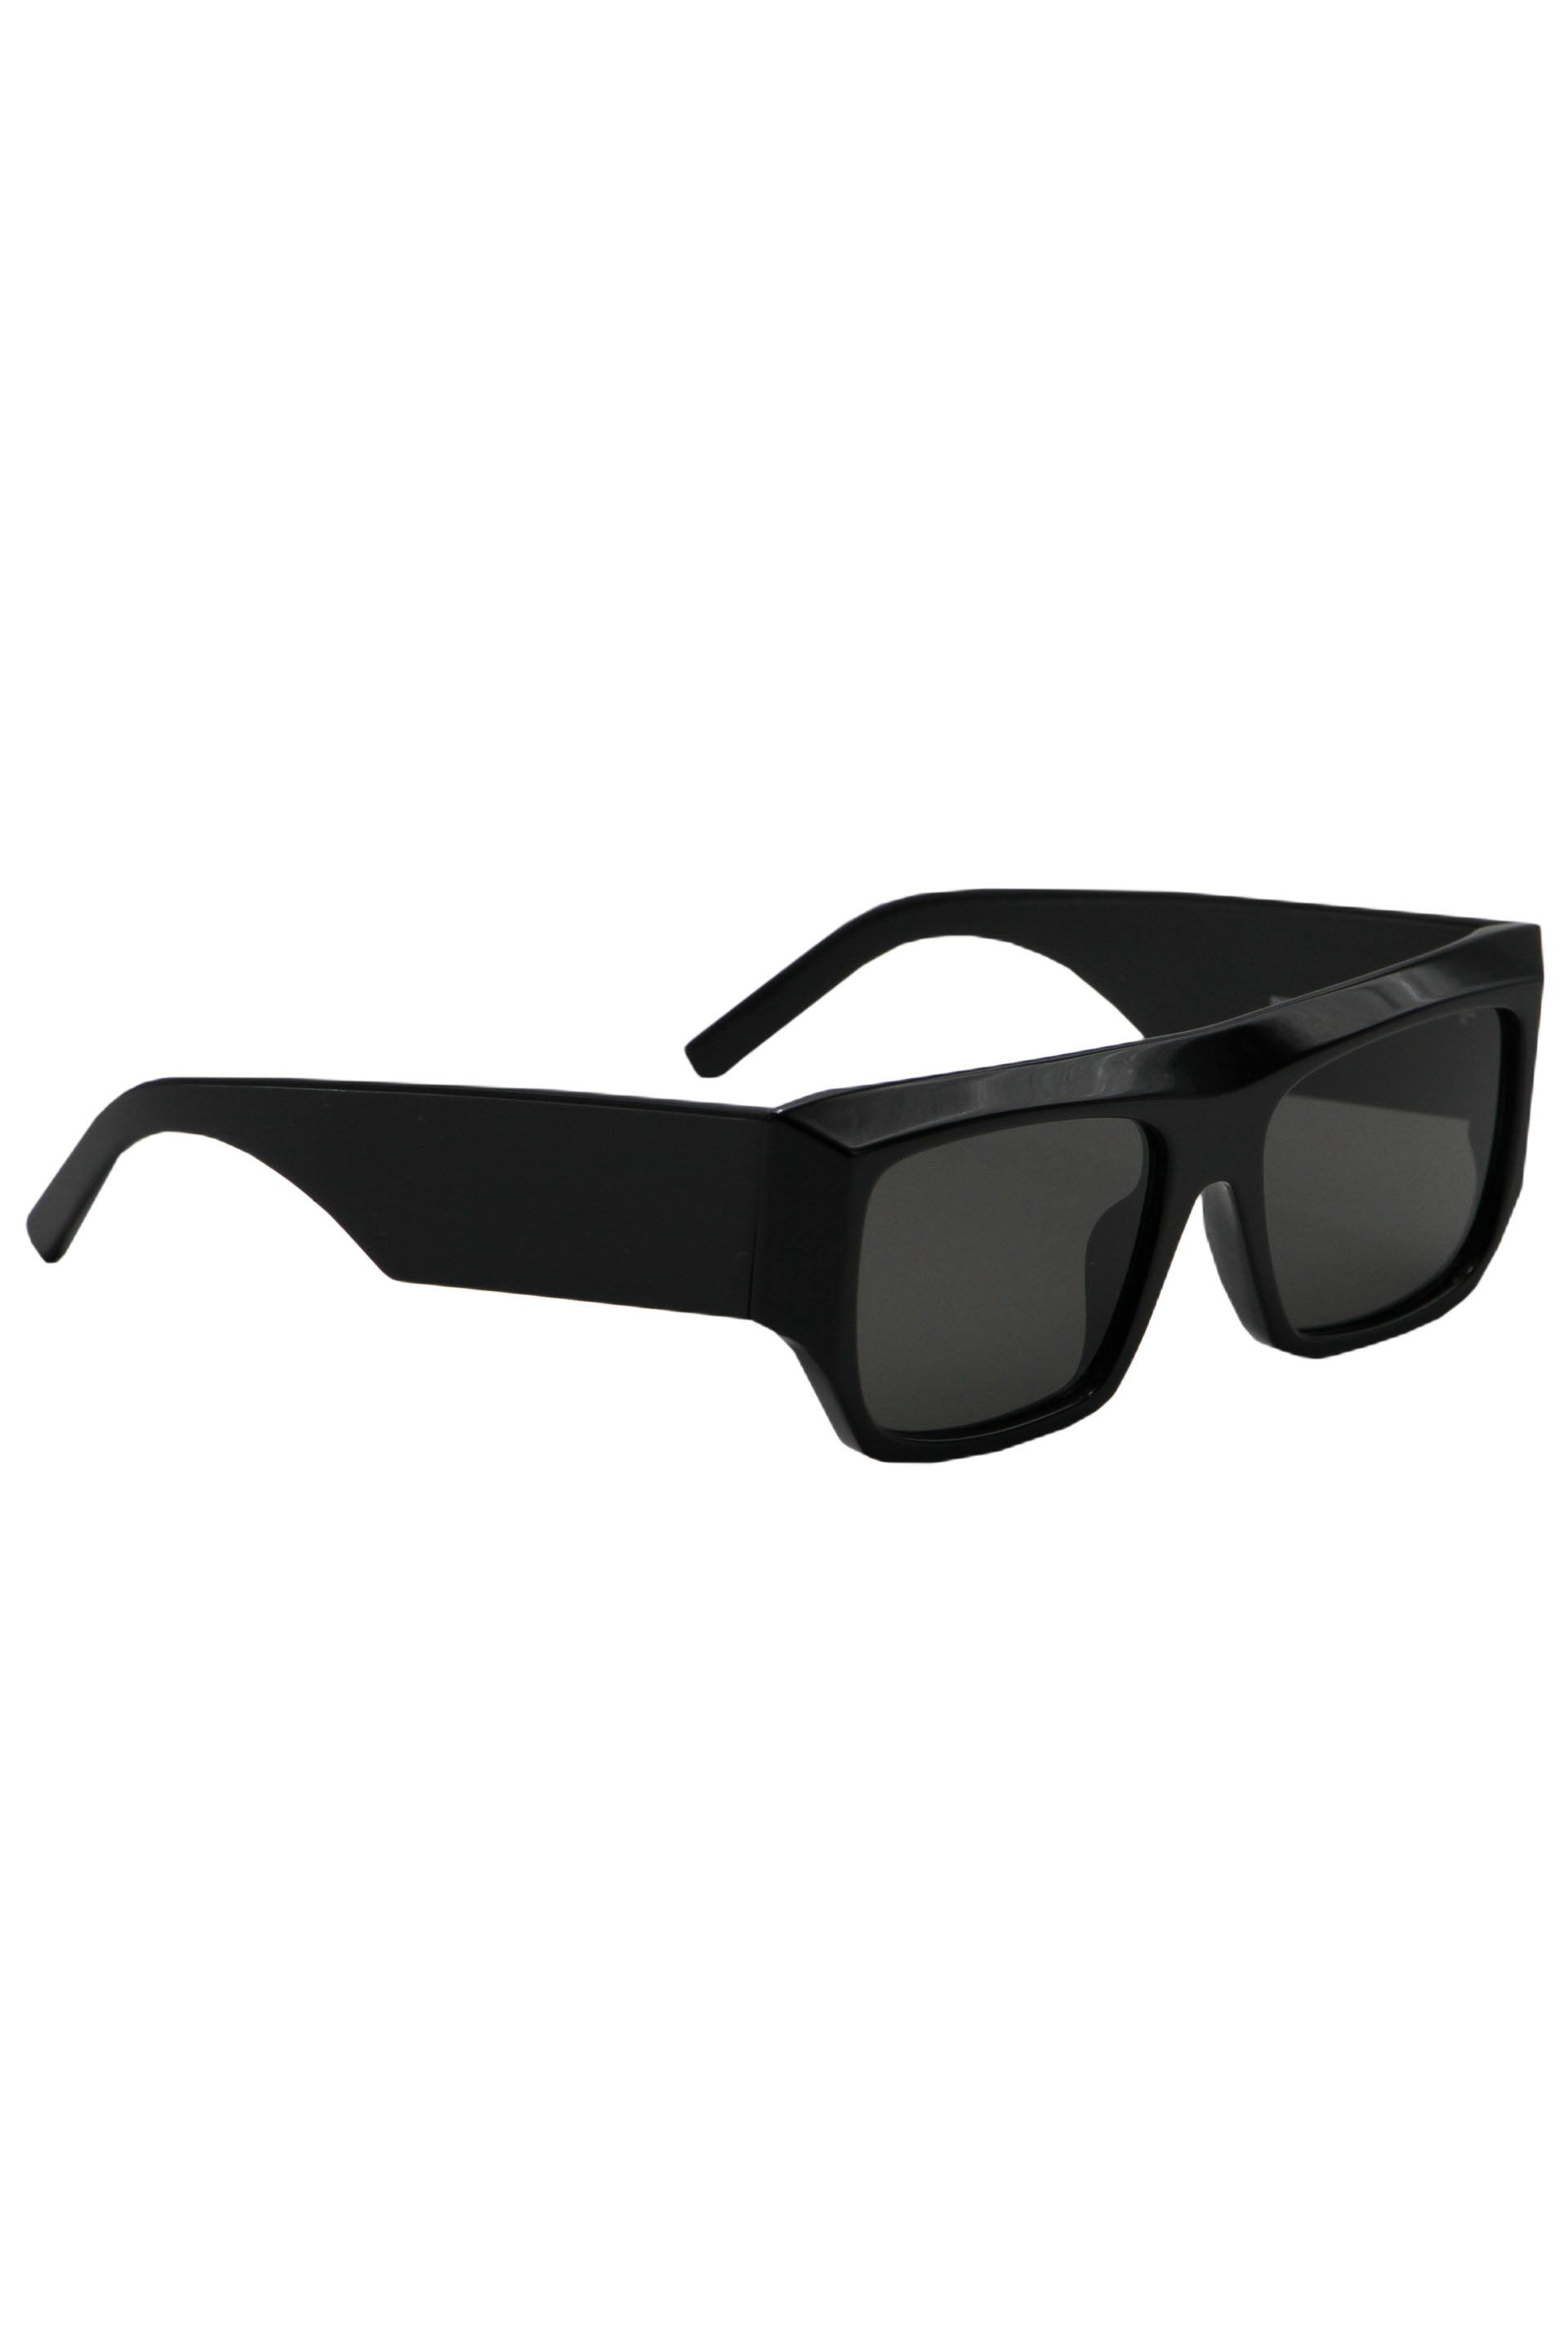 Palm-Angels-OUTLET-SALE-Blanca-rectangular-frame-sunglasses-Sonnenbrille-TU-ARCHIVE-COLLECTION-3.jpg